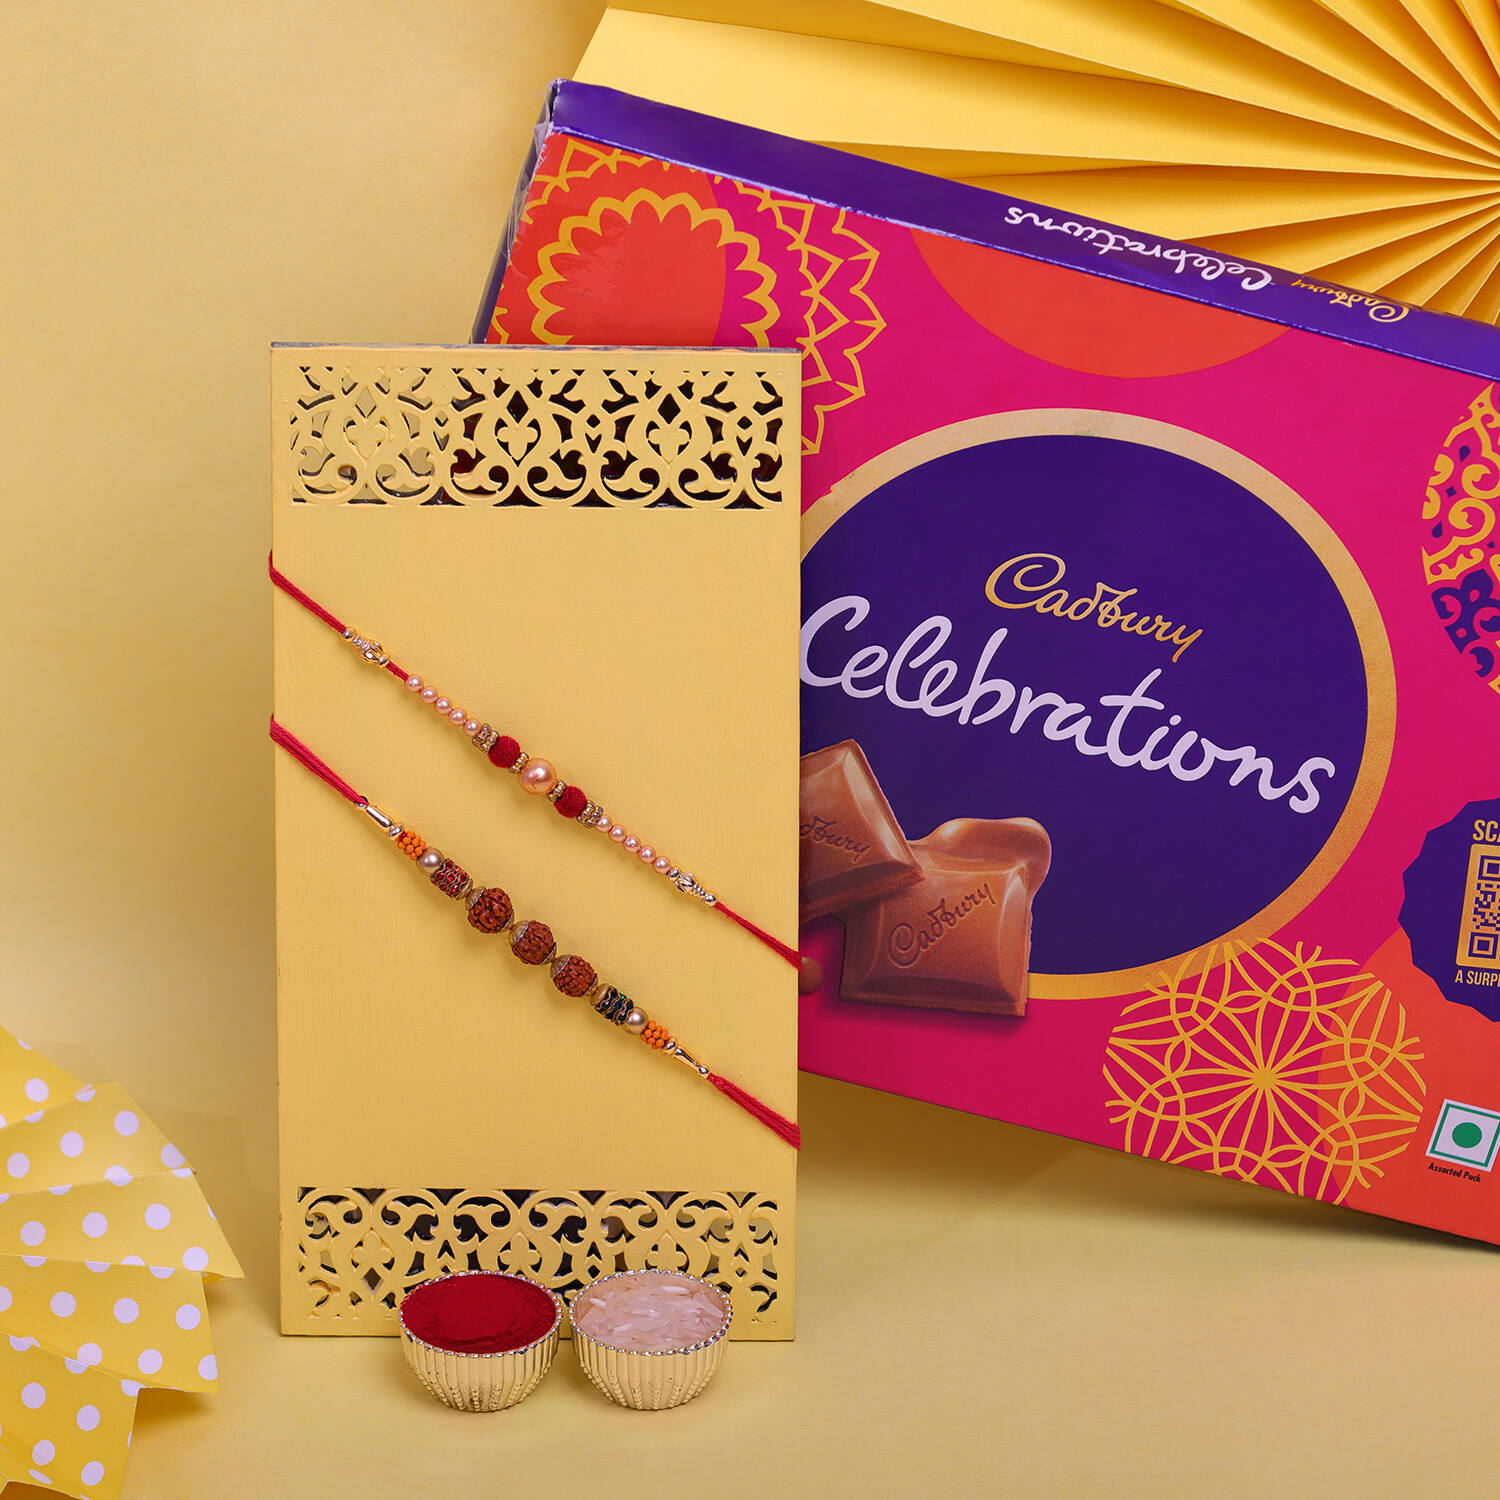 Cadbury Celebration Chocolate Pack and Kaju Katli Box